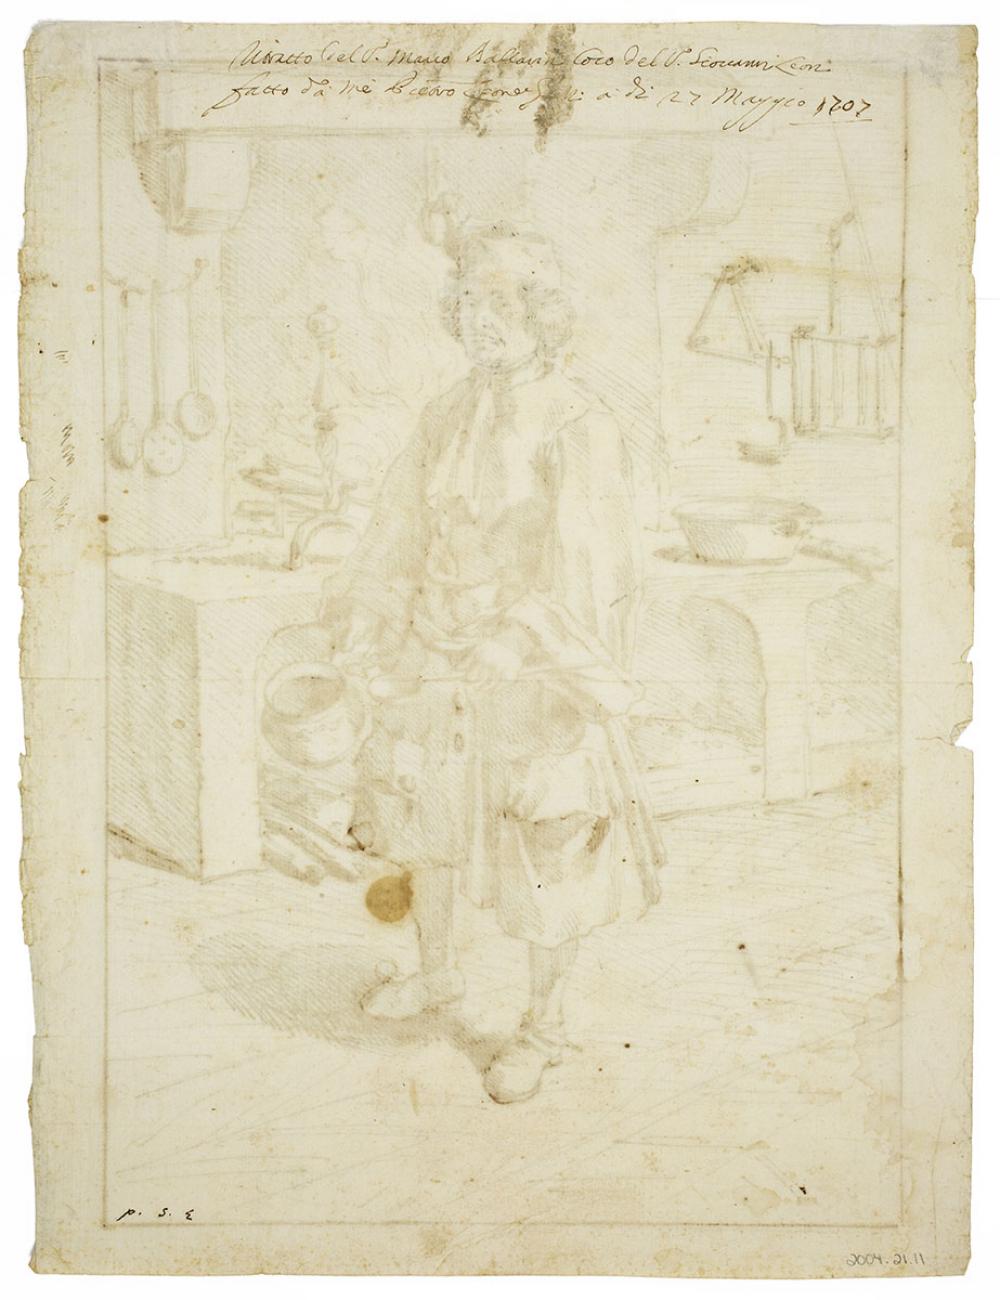 Pierre Leone Ghezzi, Marco Ballarin, Cook, 1707 May 27